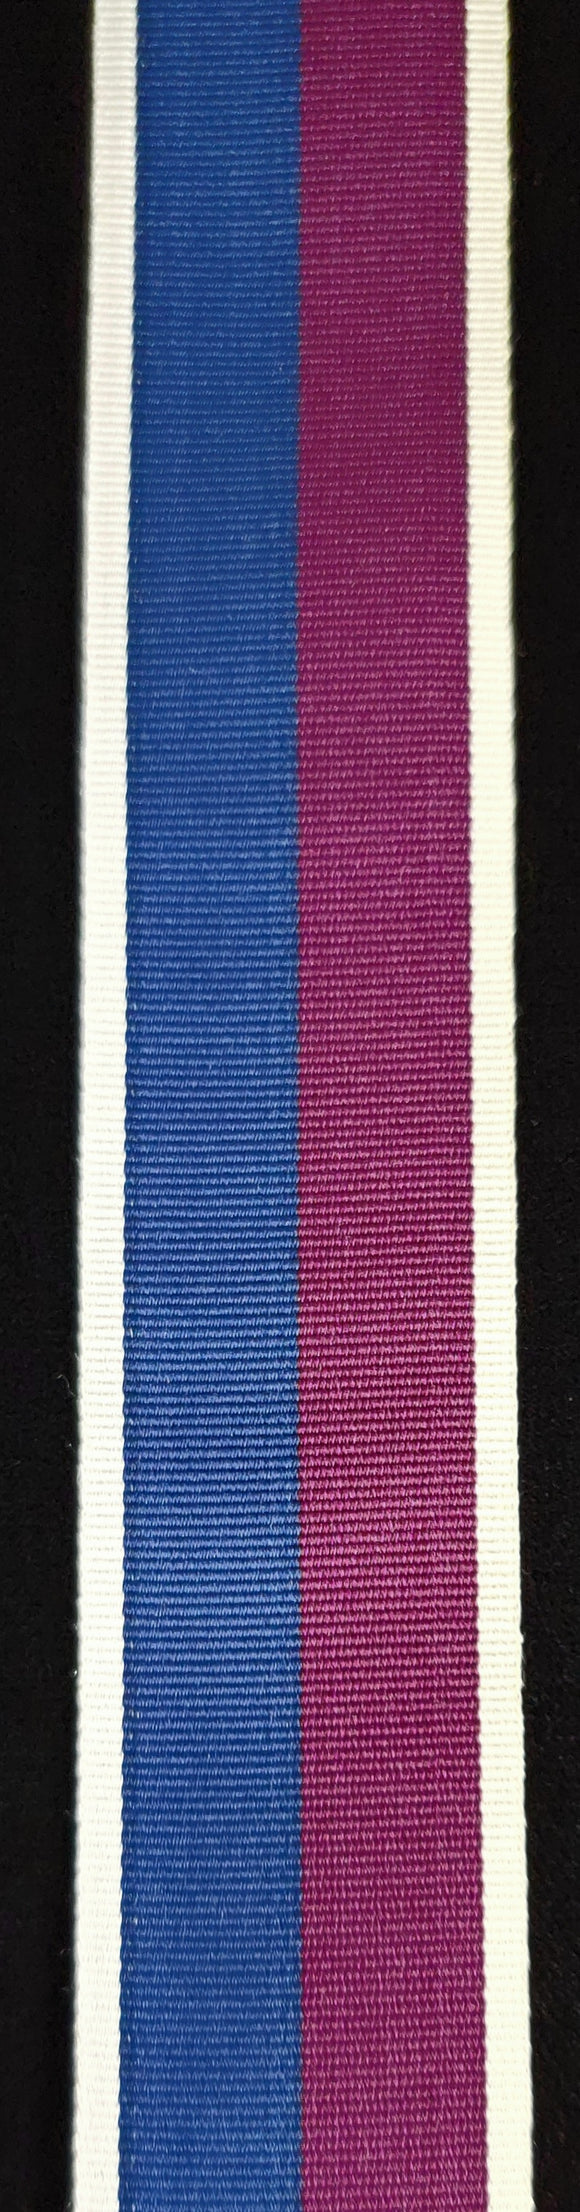 Ribbon, UK RAF LS&GC Medal